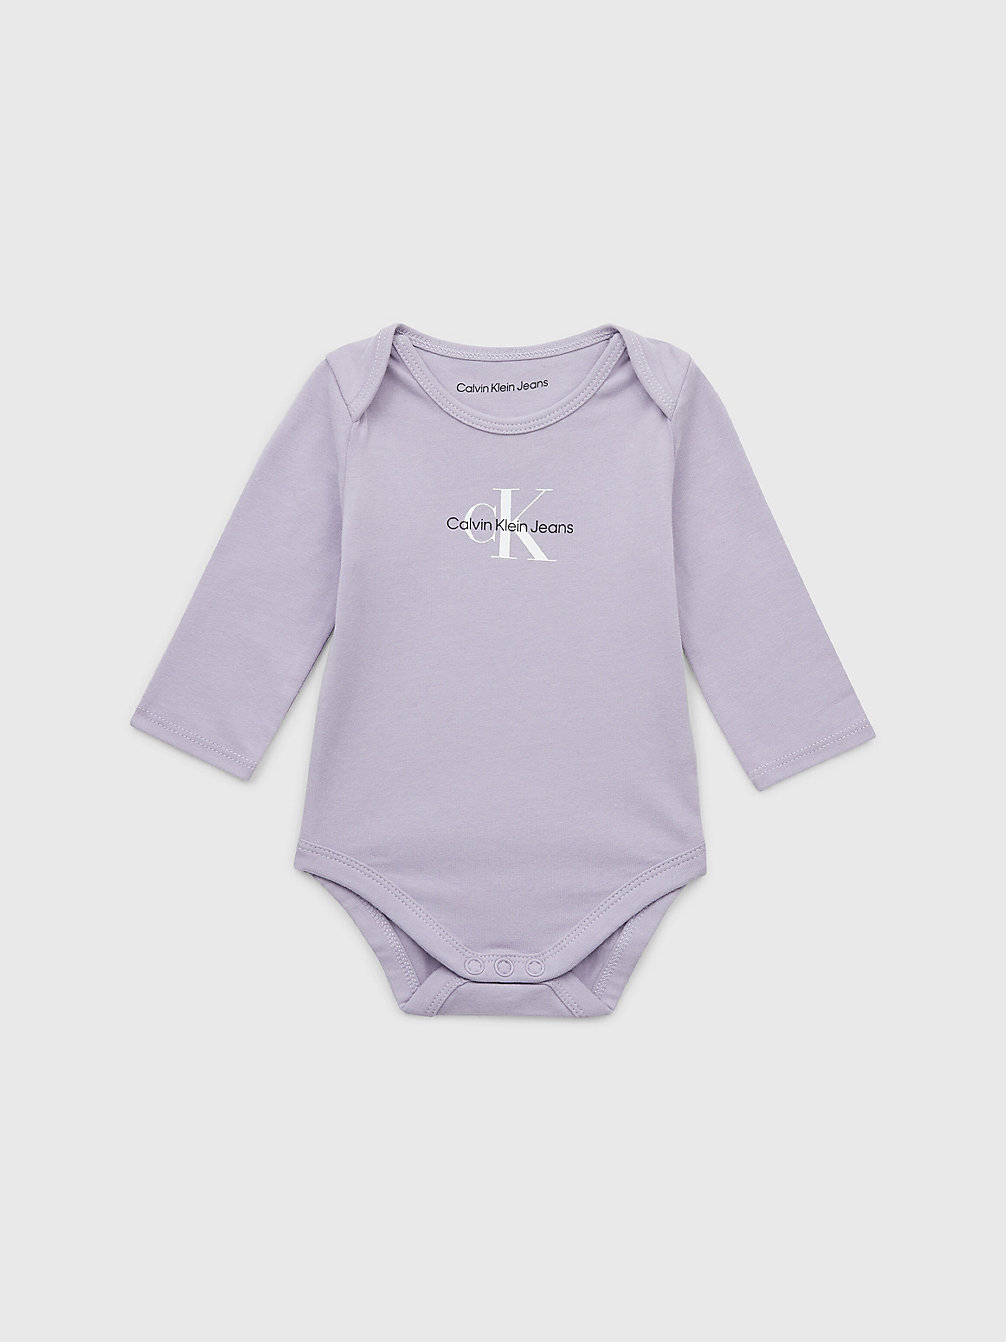 SMOKY LILAC > Боди для новорожденных с логотипом > undefined newborn - Calvin Klein